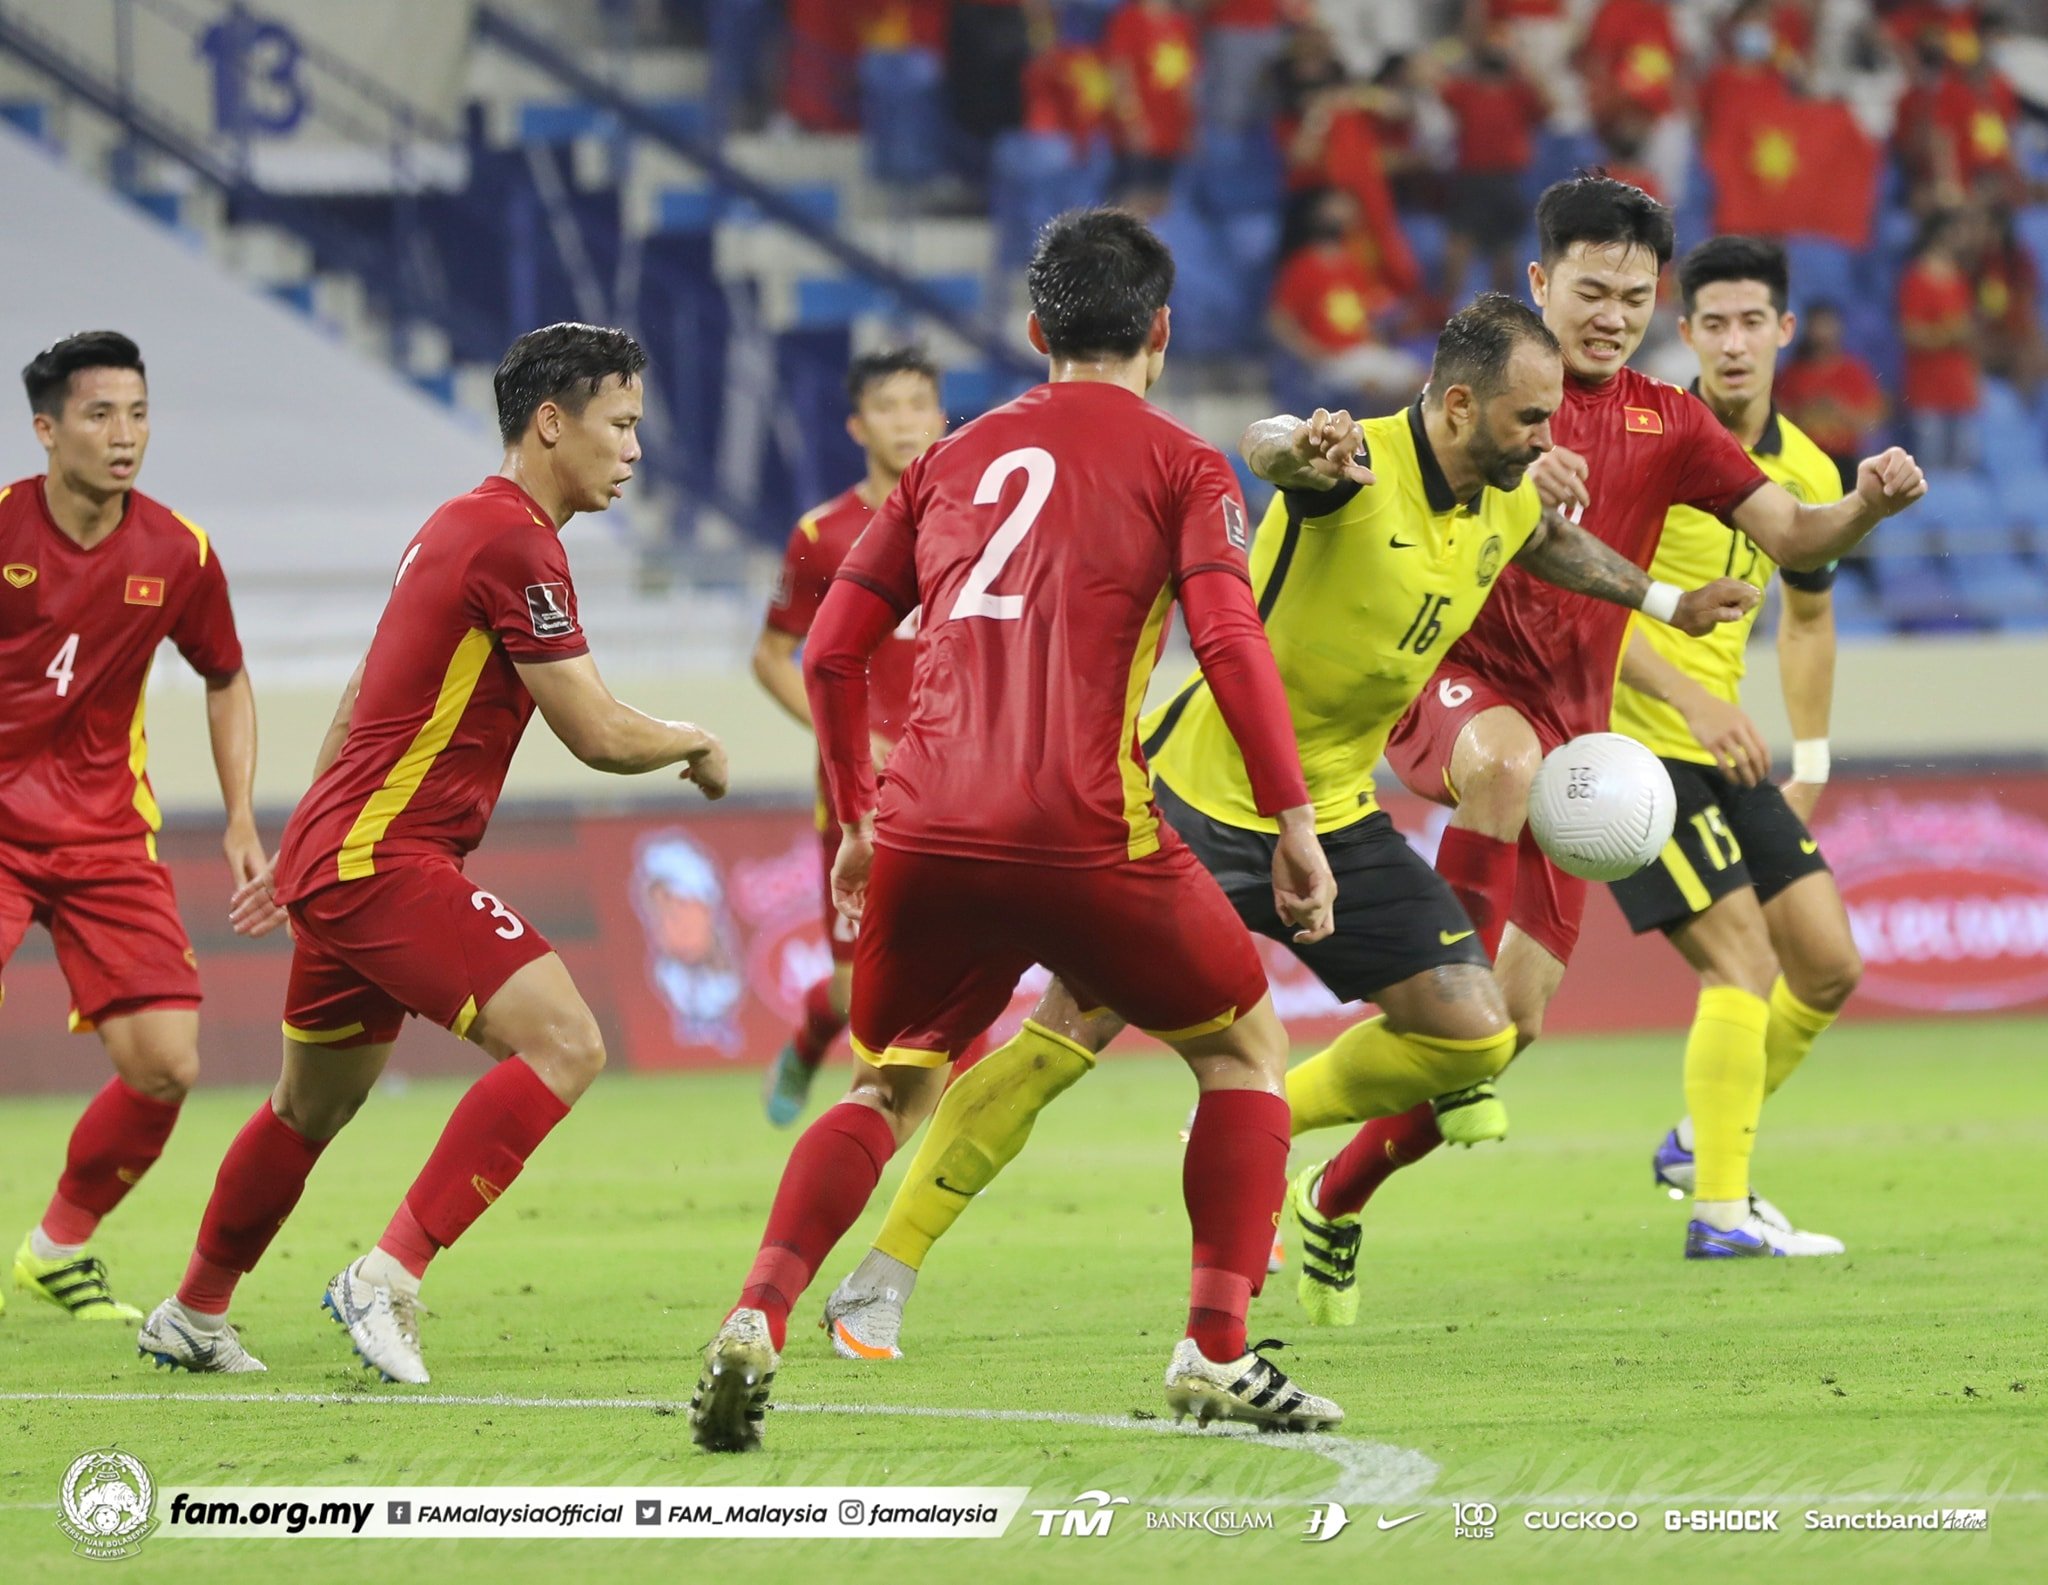 Pasukan bola sepak kebangsaan vietnam lwn pasukan bola sepak kebangsaan malaysia